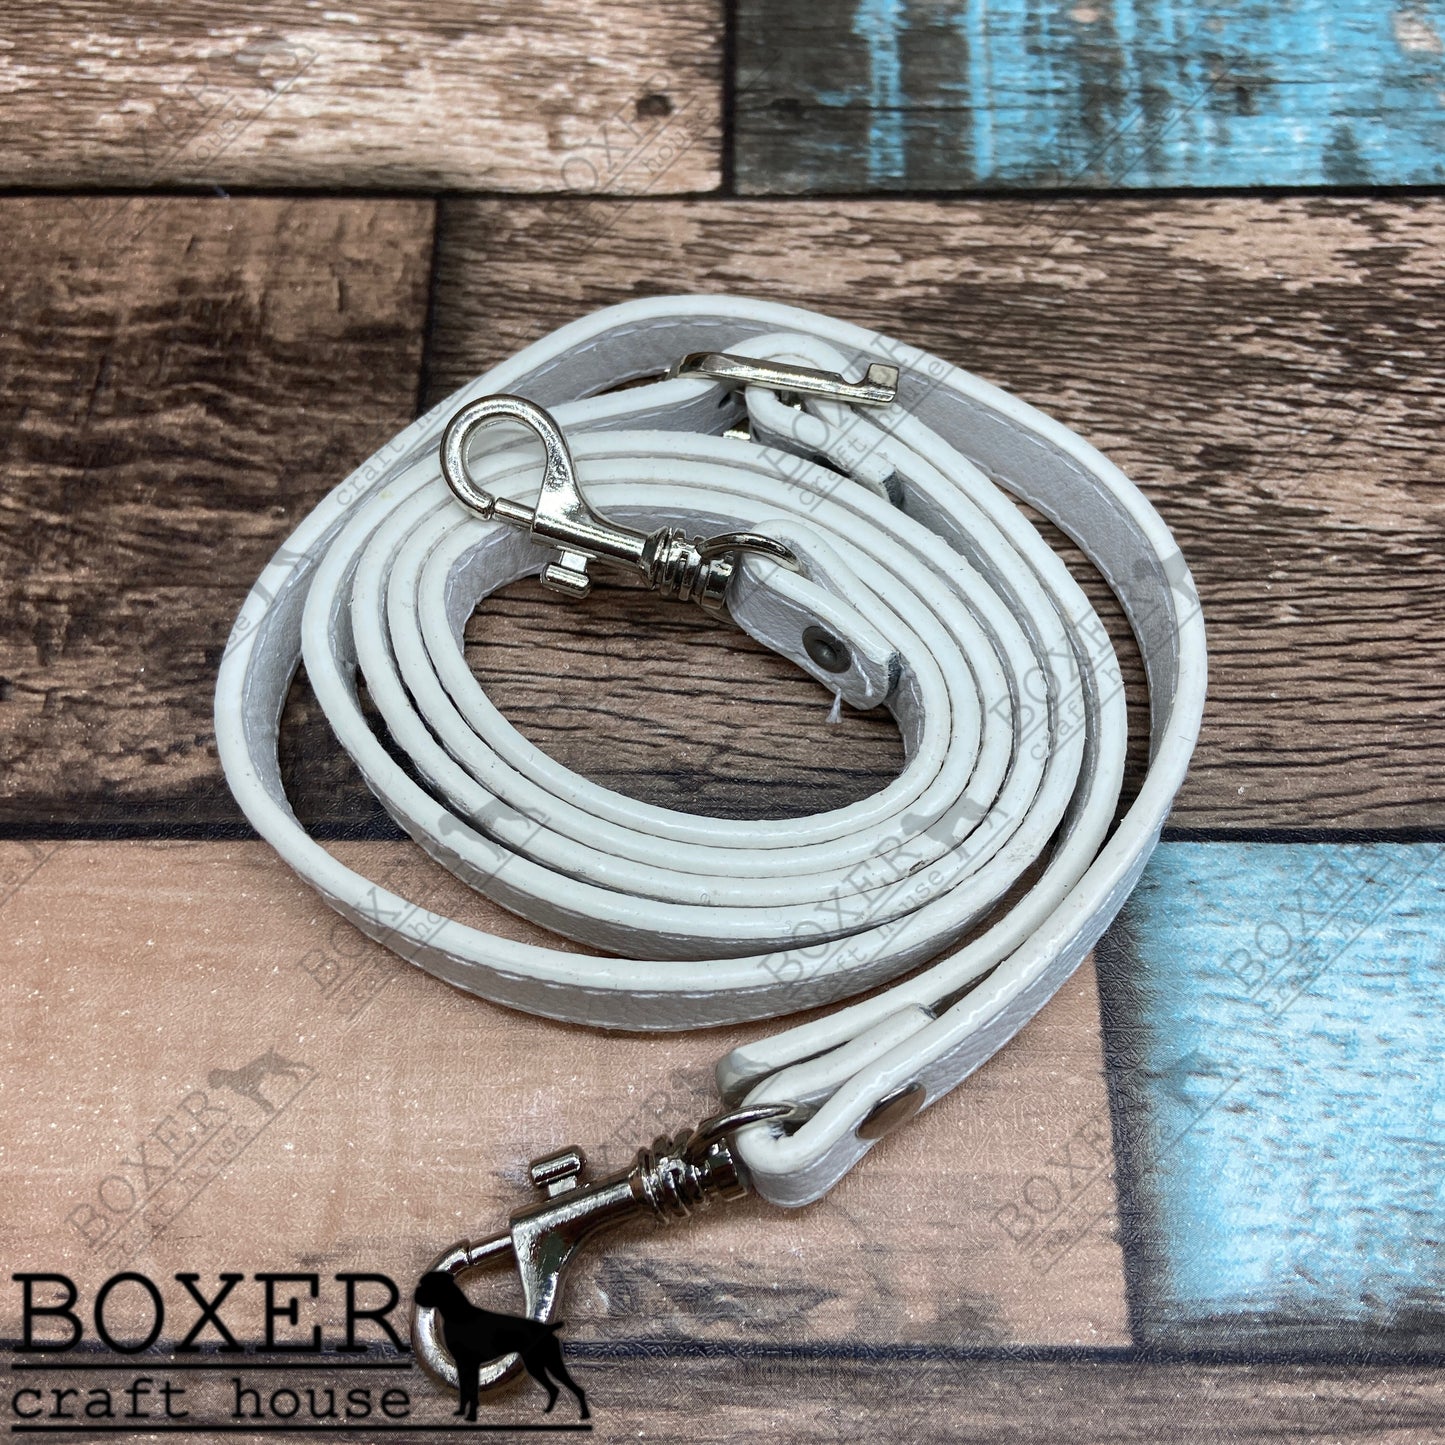 Boxer Craft House White Purse Bag Strap Silver Hardware